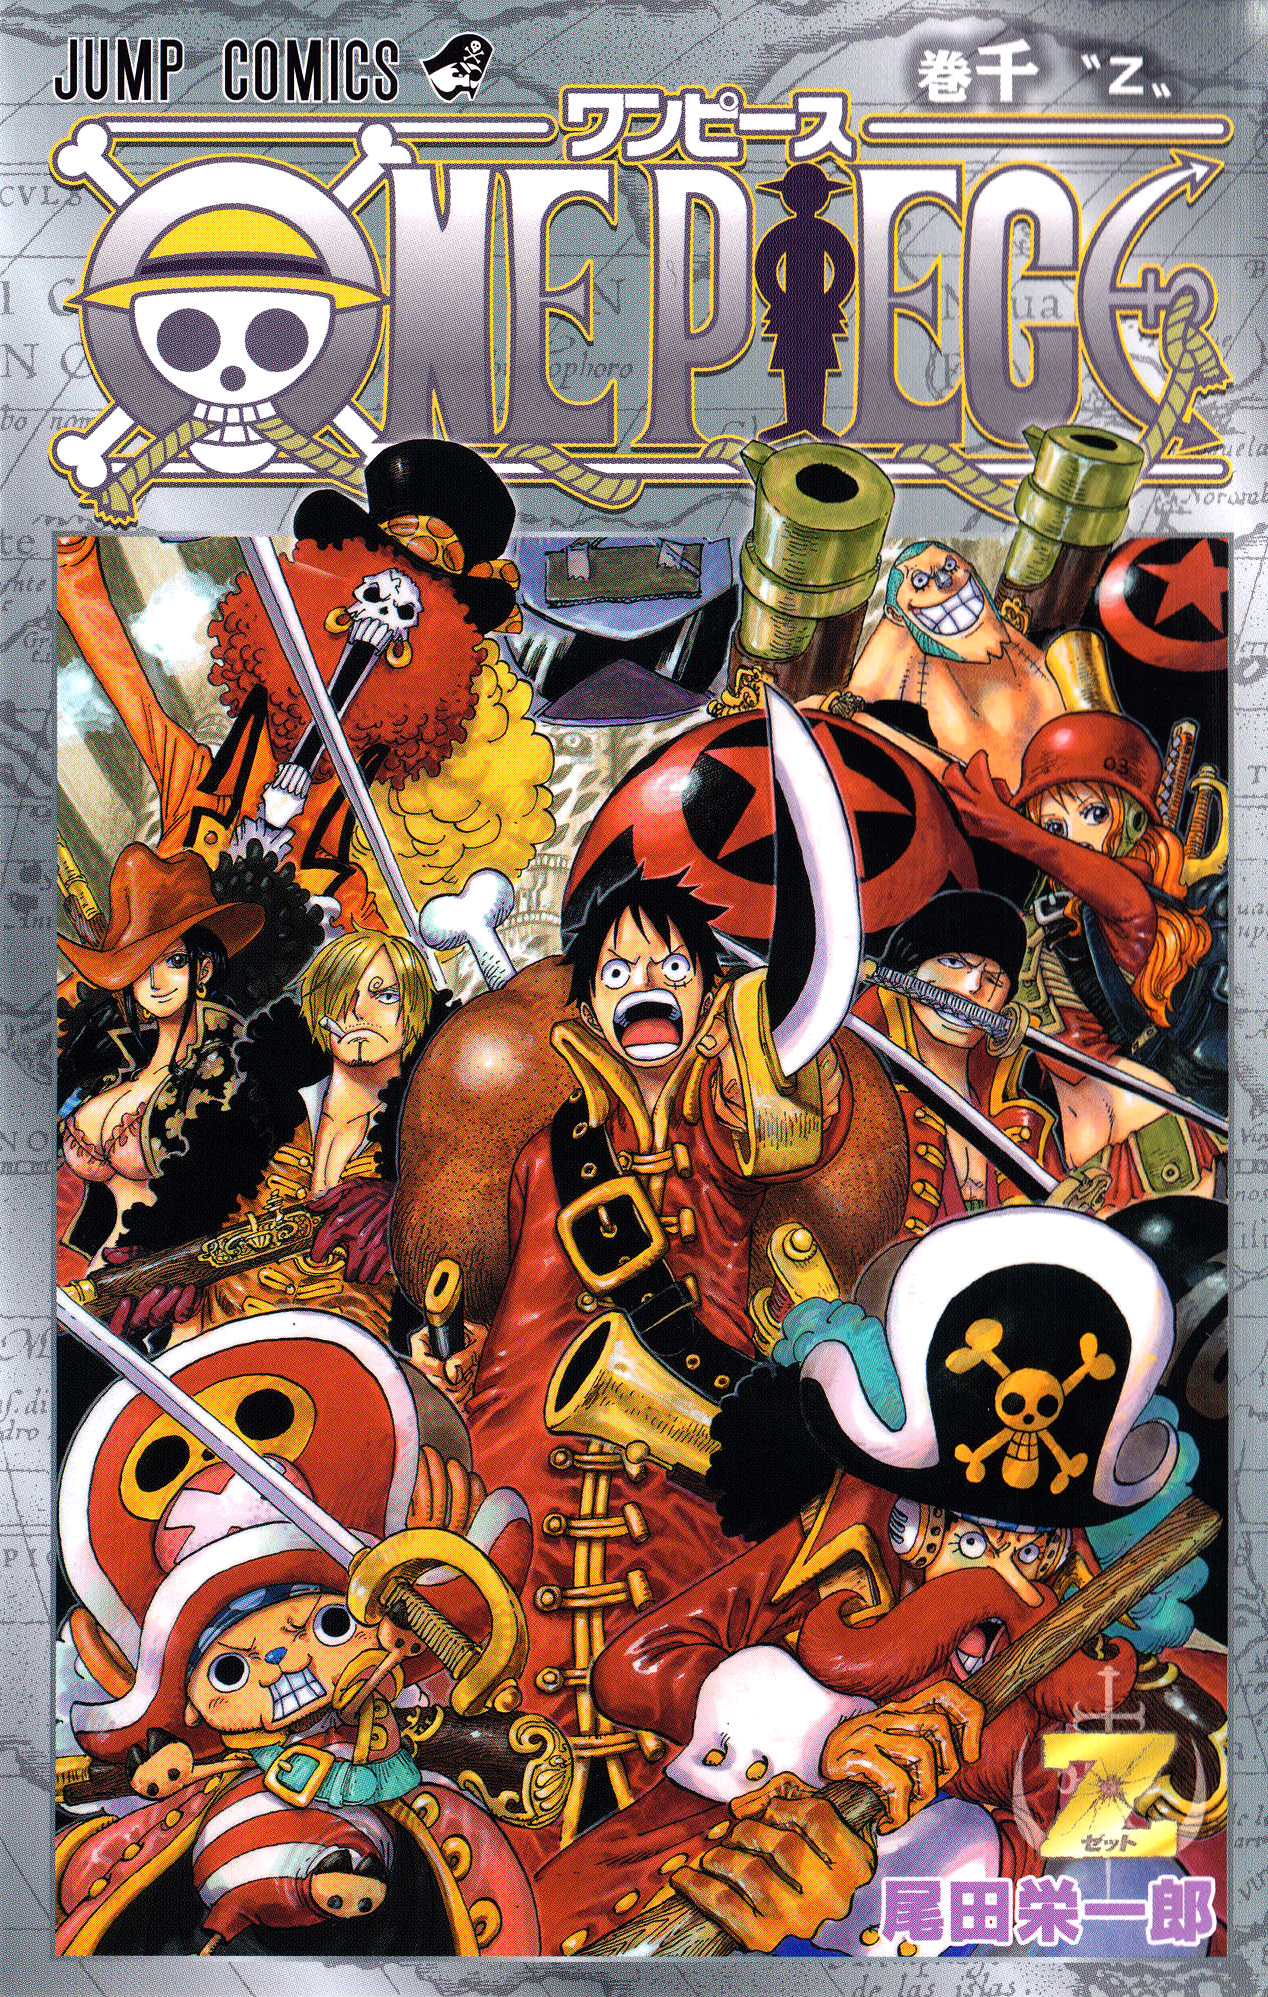 One Piece Comic Manga vol3 1st Edition Eiichiro Oda 1998 Rare